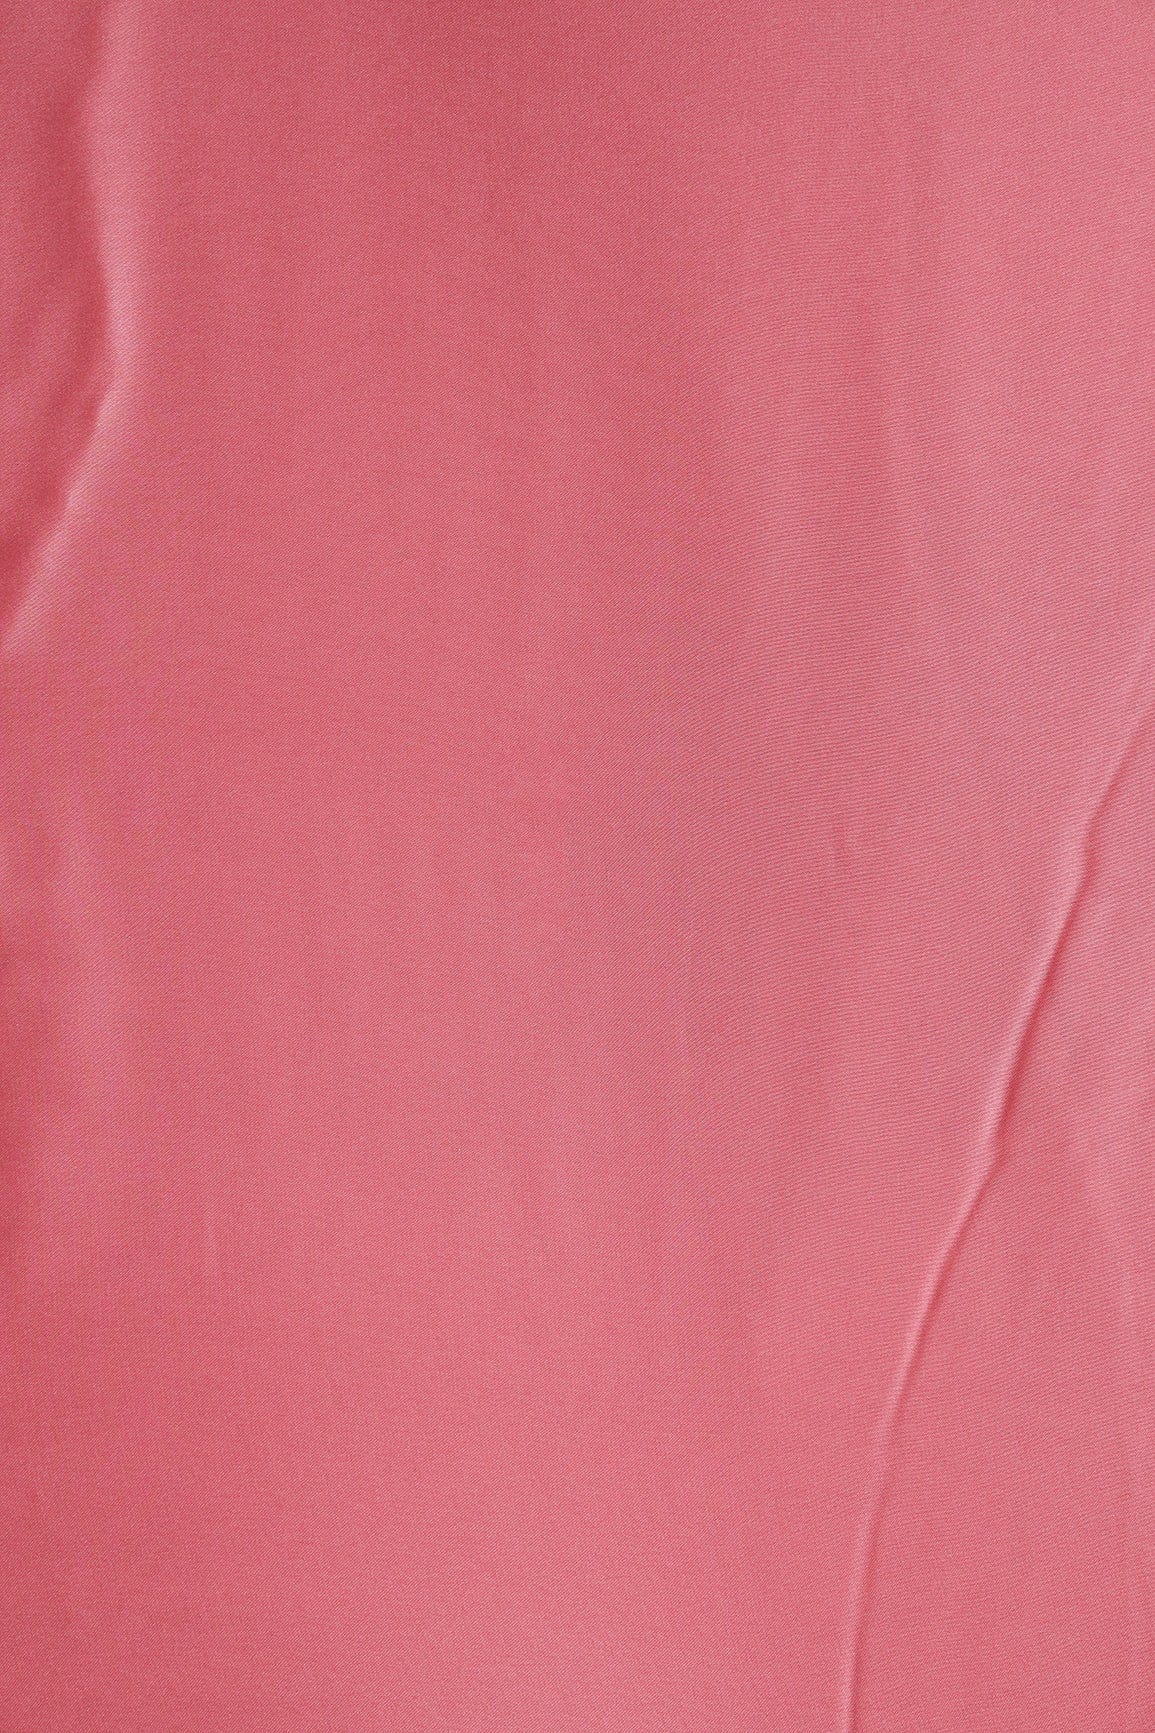 doeraa Plain Fabrics Dusty Pink Dyed Georgette Satin Fabric